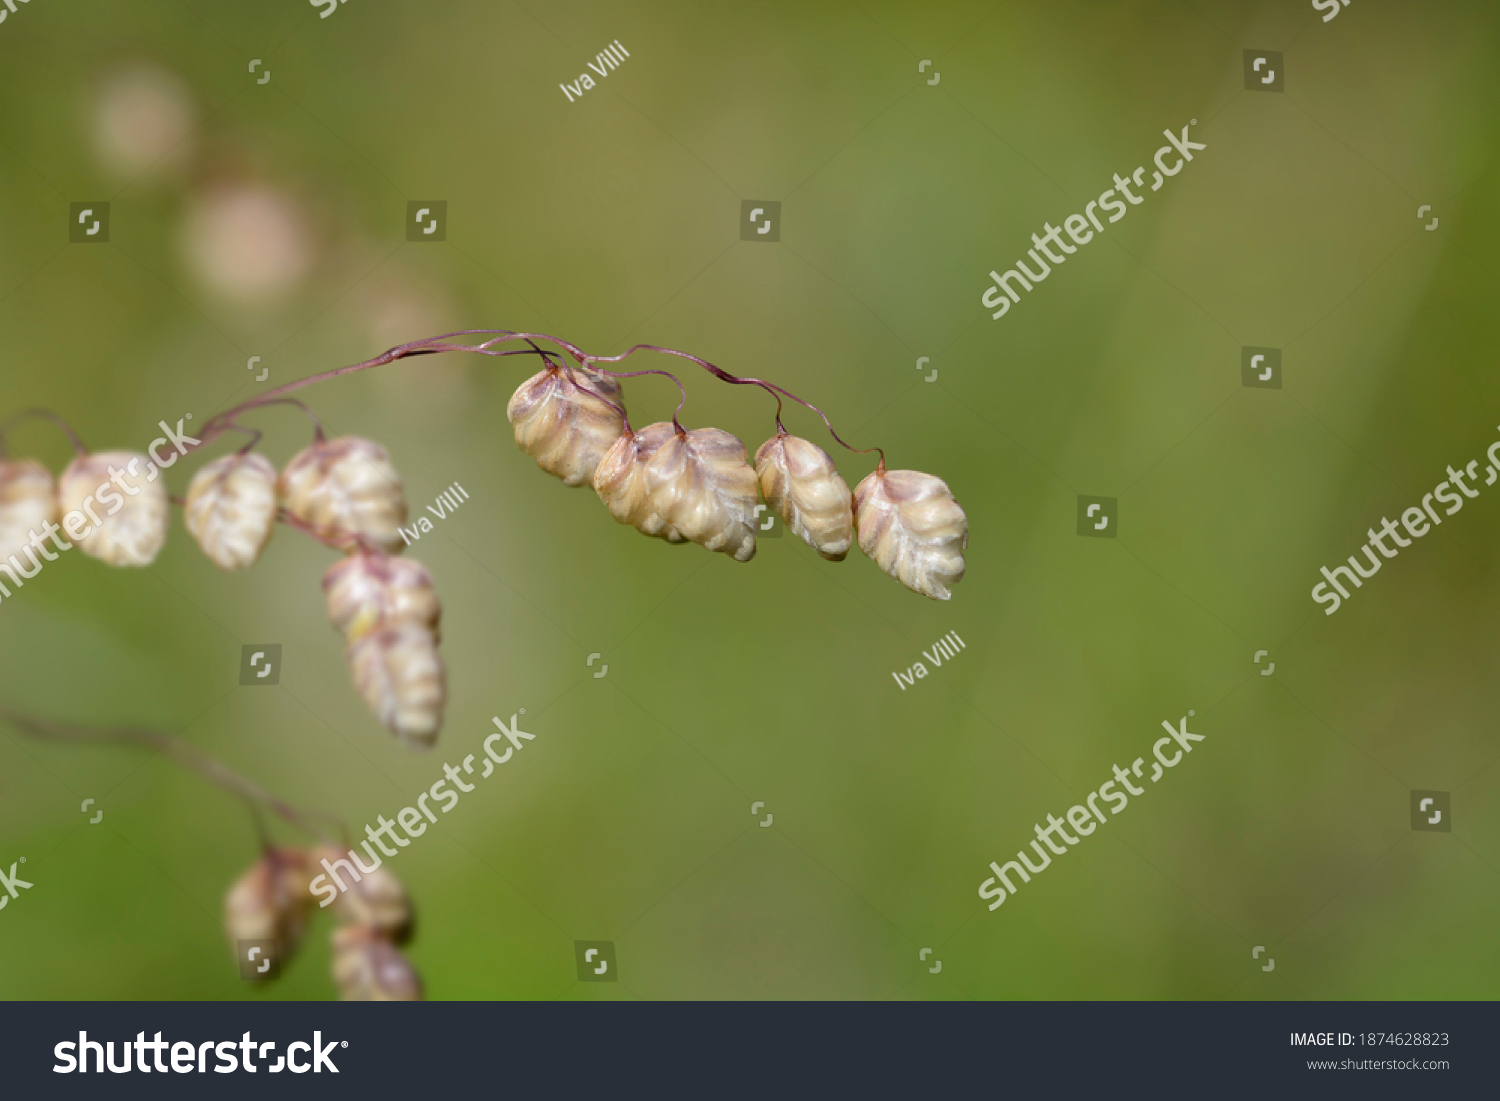 Dry common quaking grass - Latin name - Briza media #1874628823